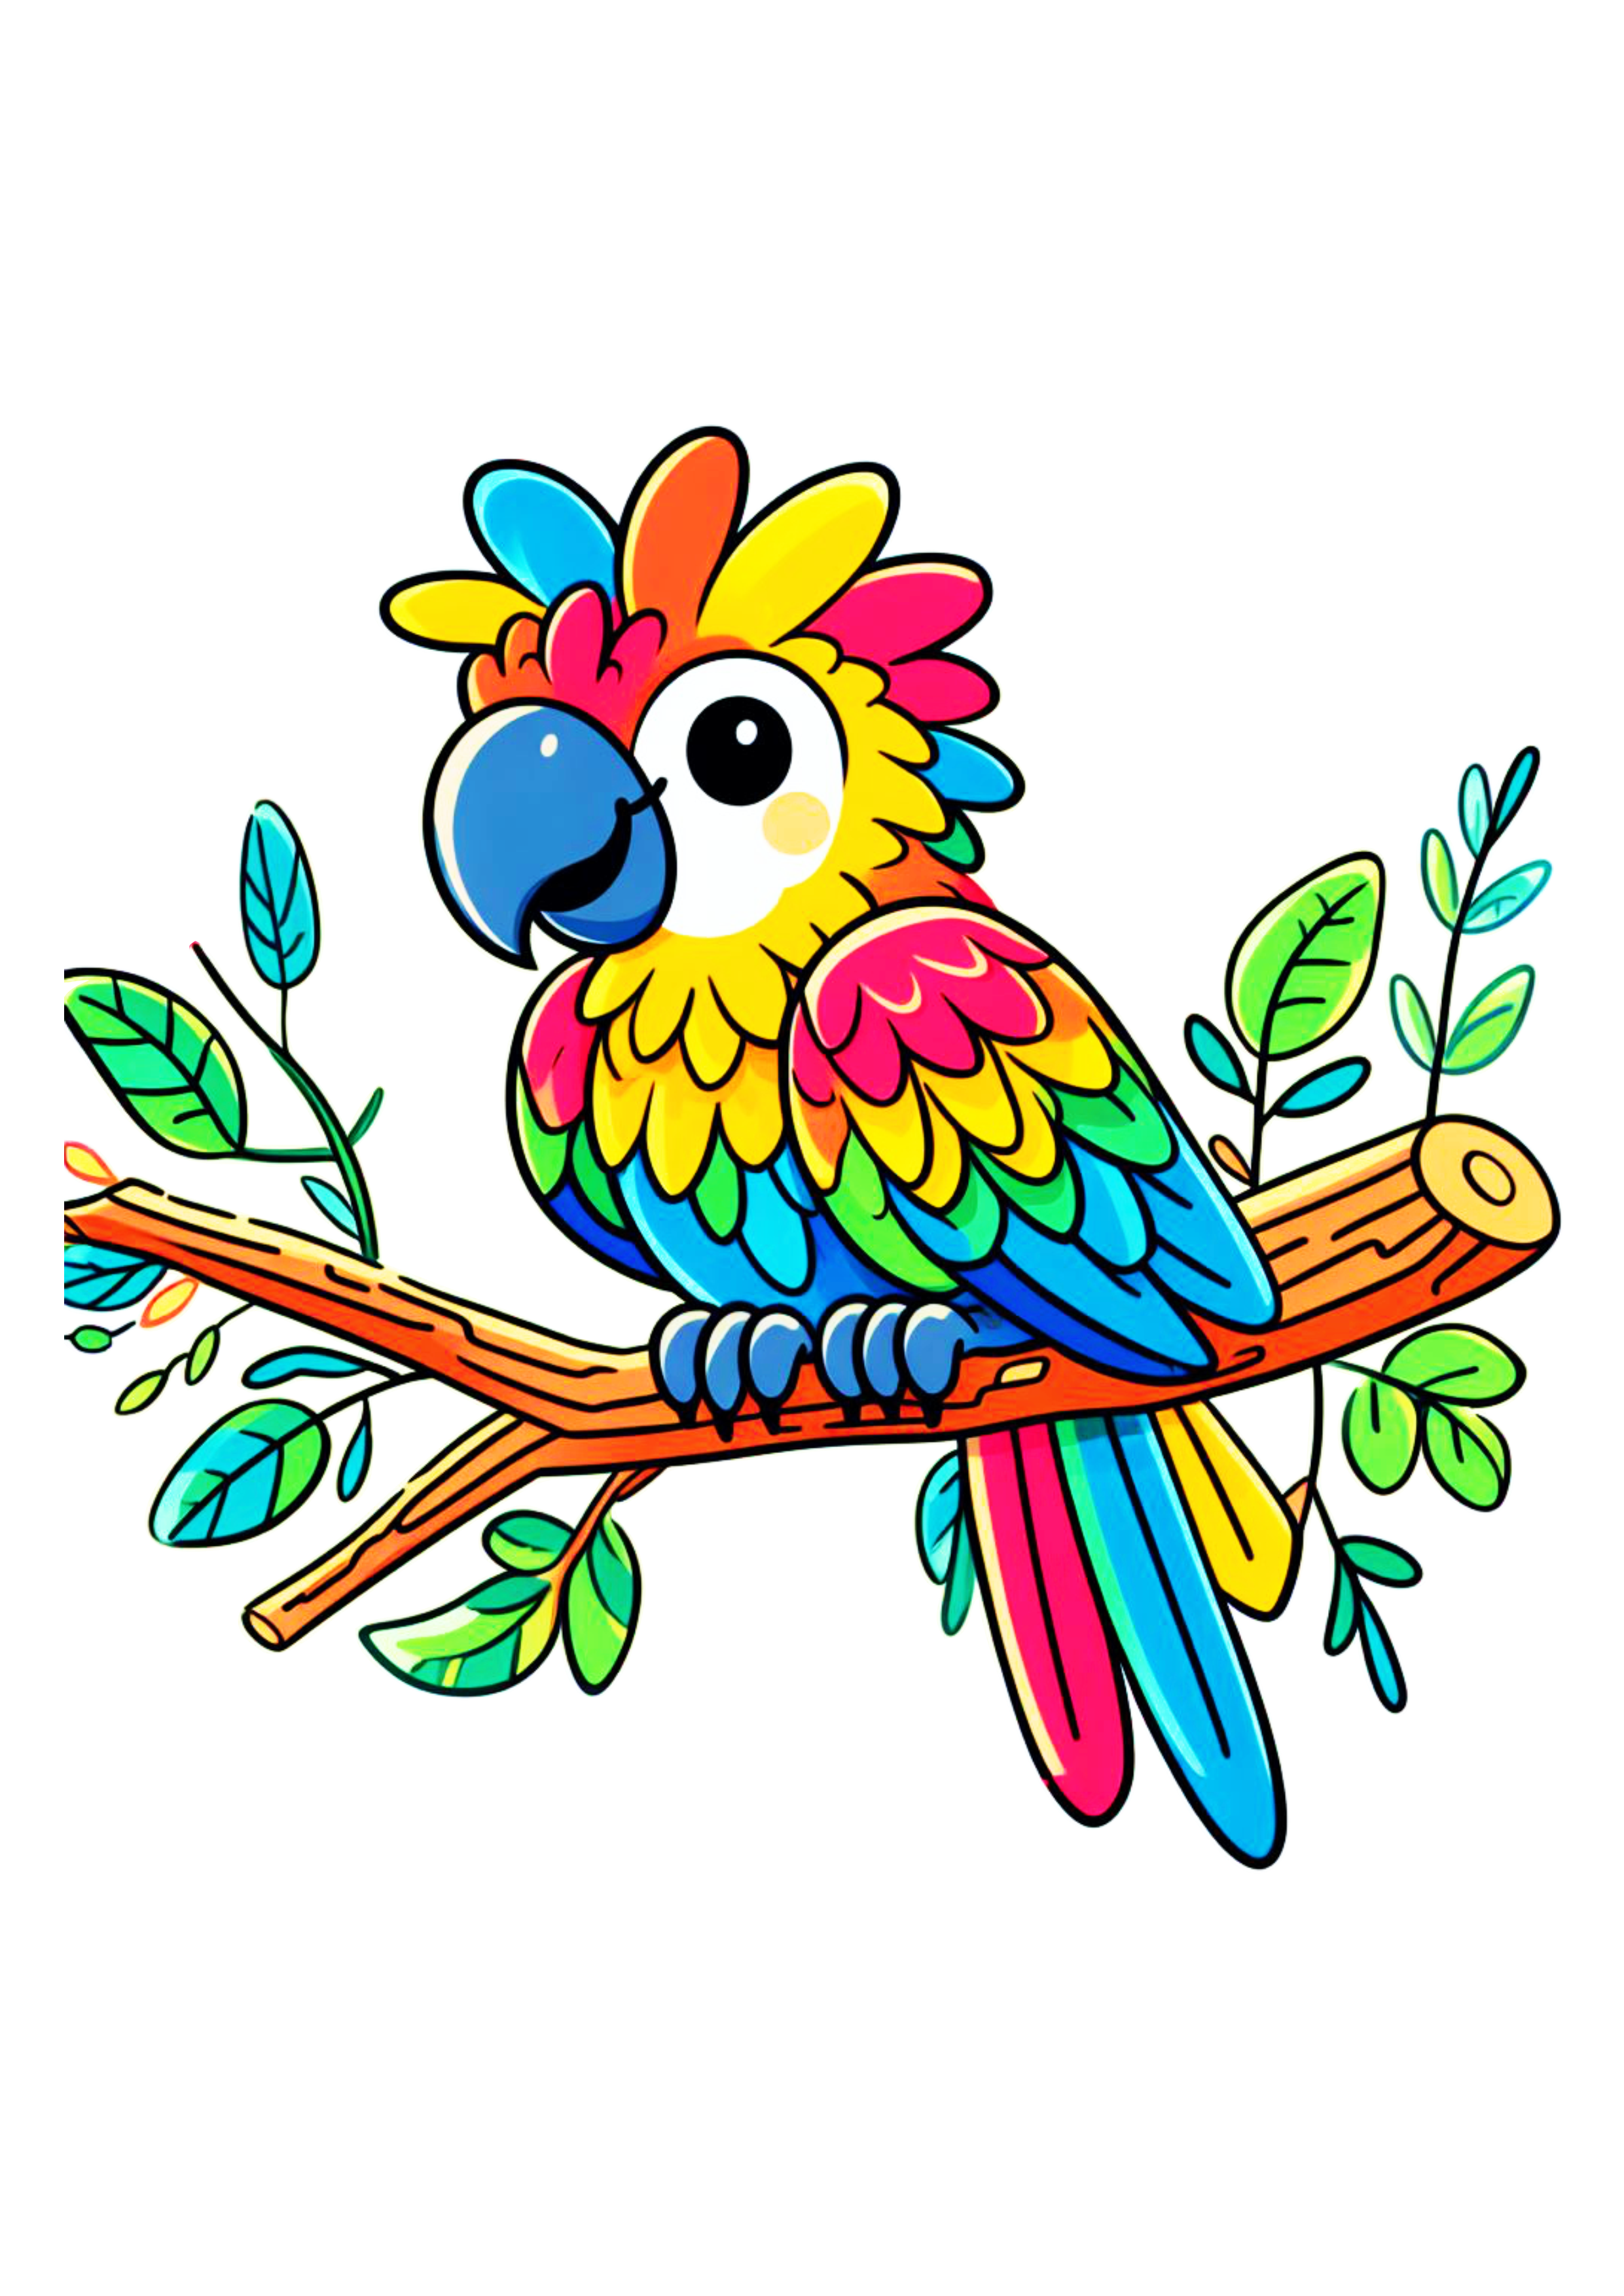 Papagaio desenho colorido artes gráficas png